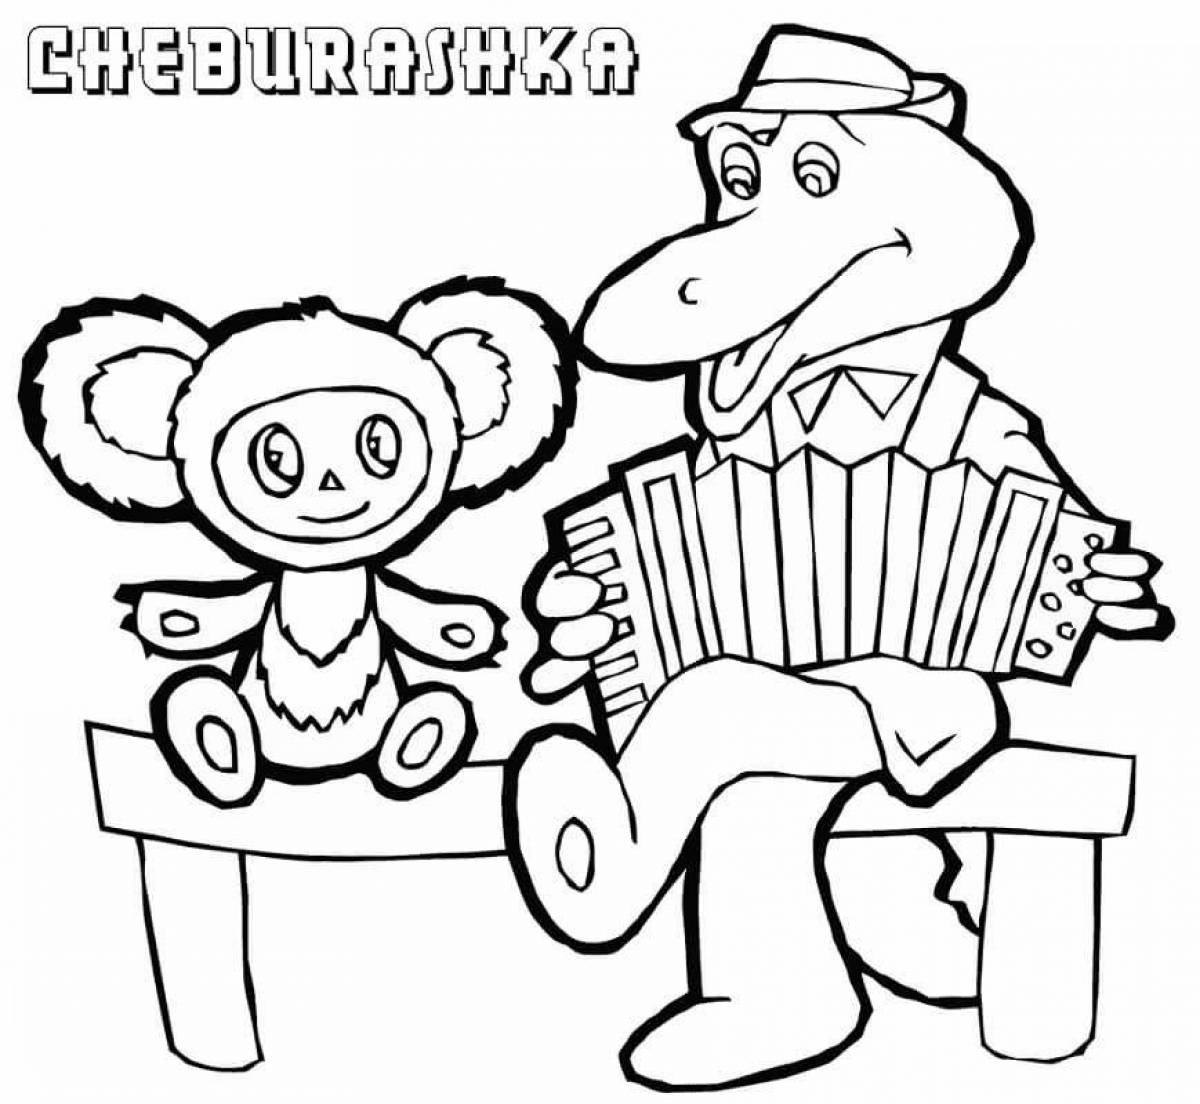 Coloring page wonderful cheburashka and gene